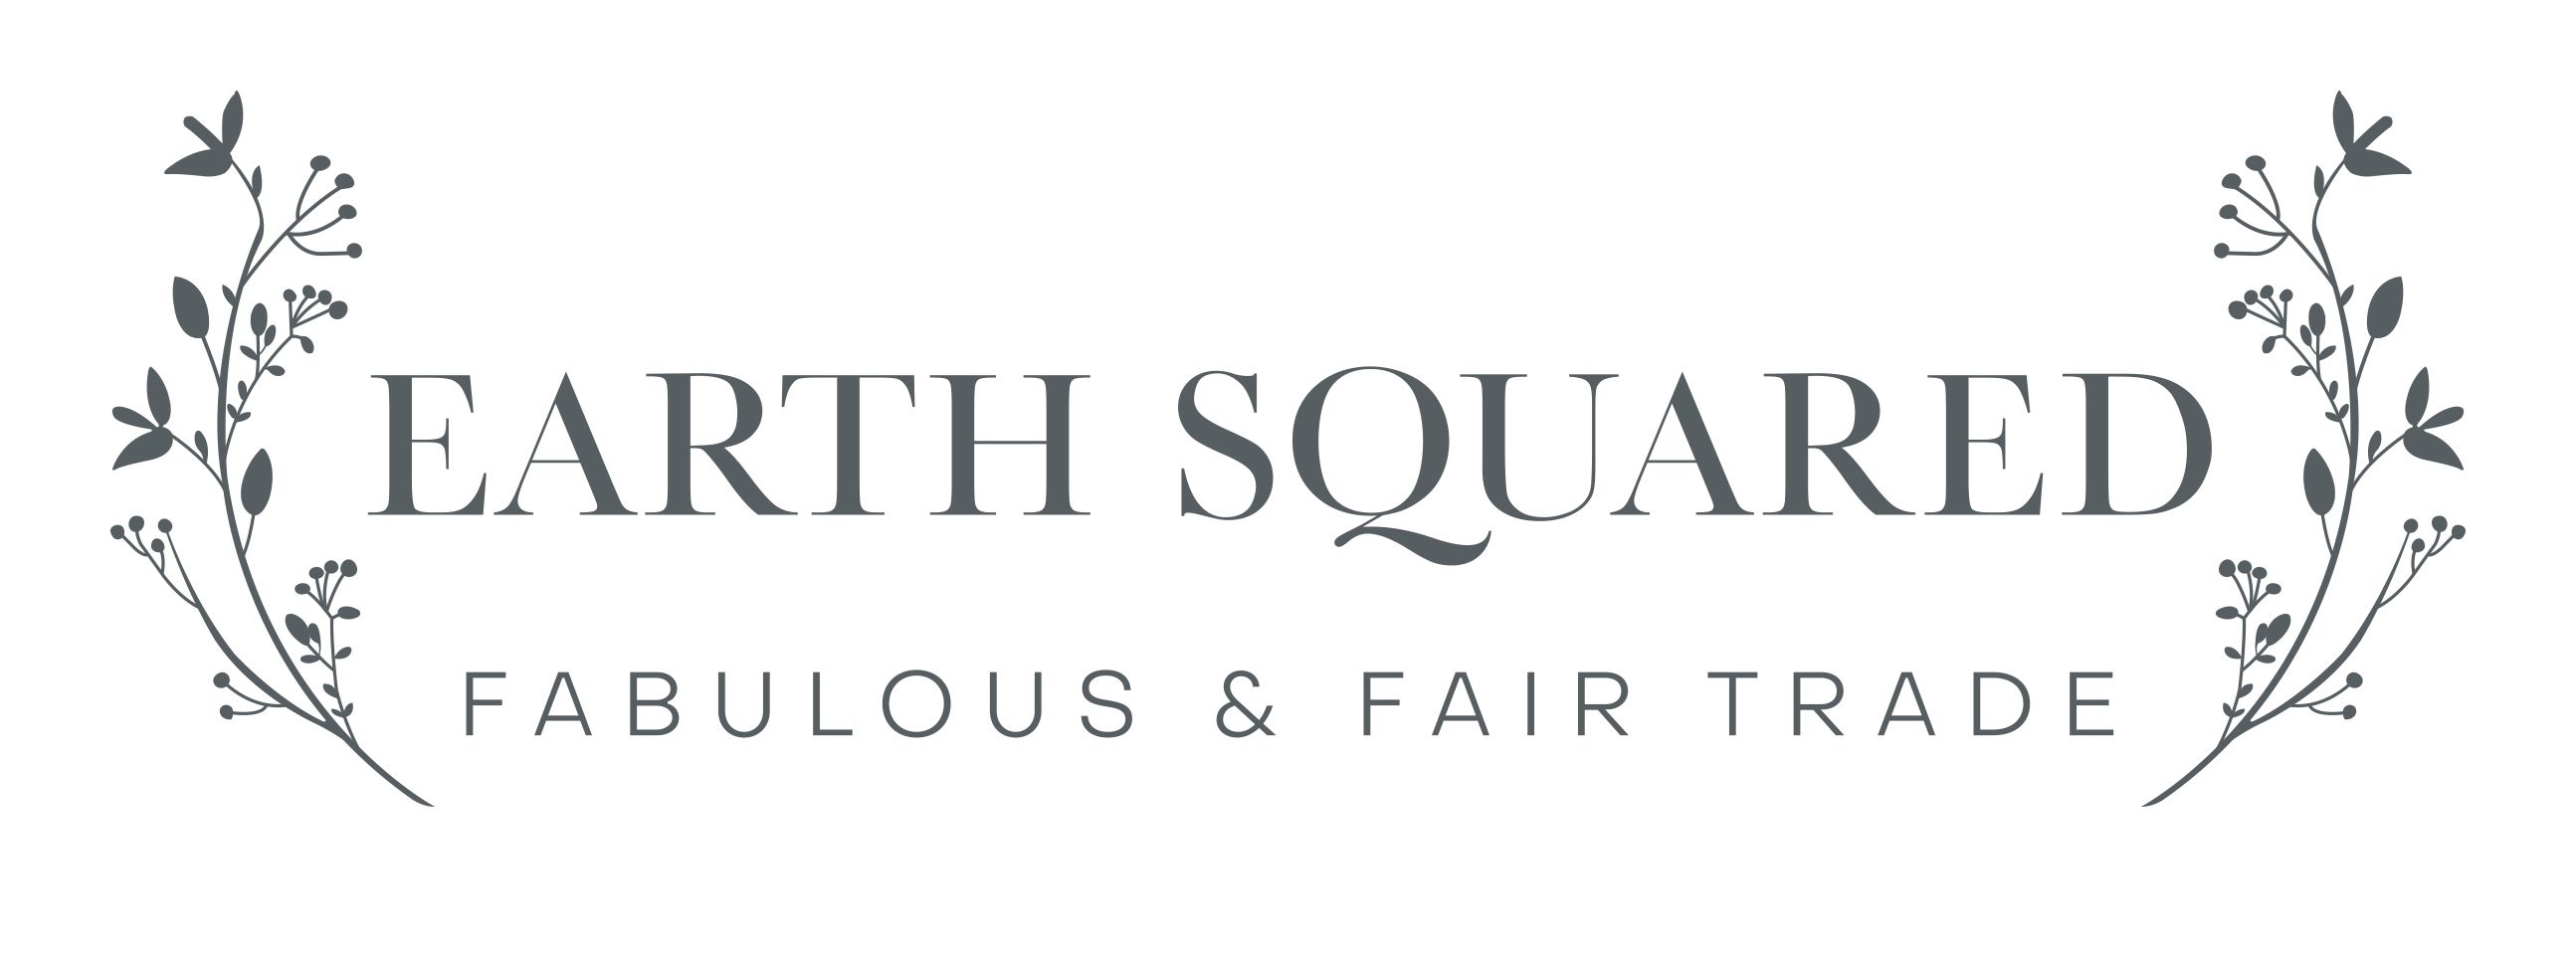 Earth Squared Ltd